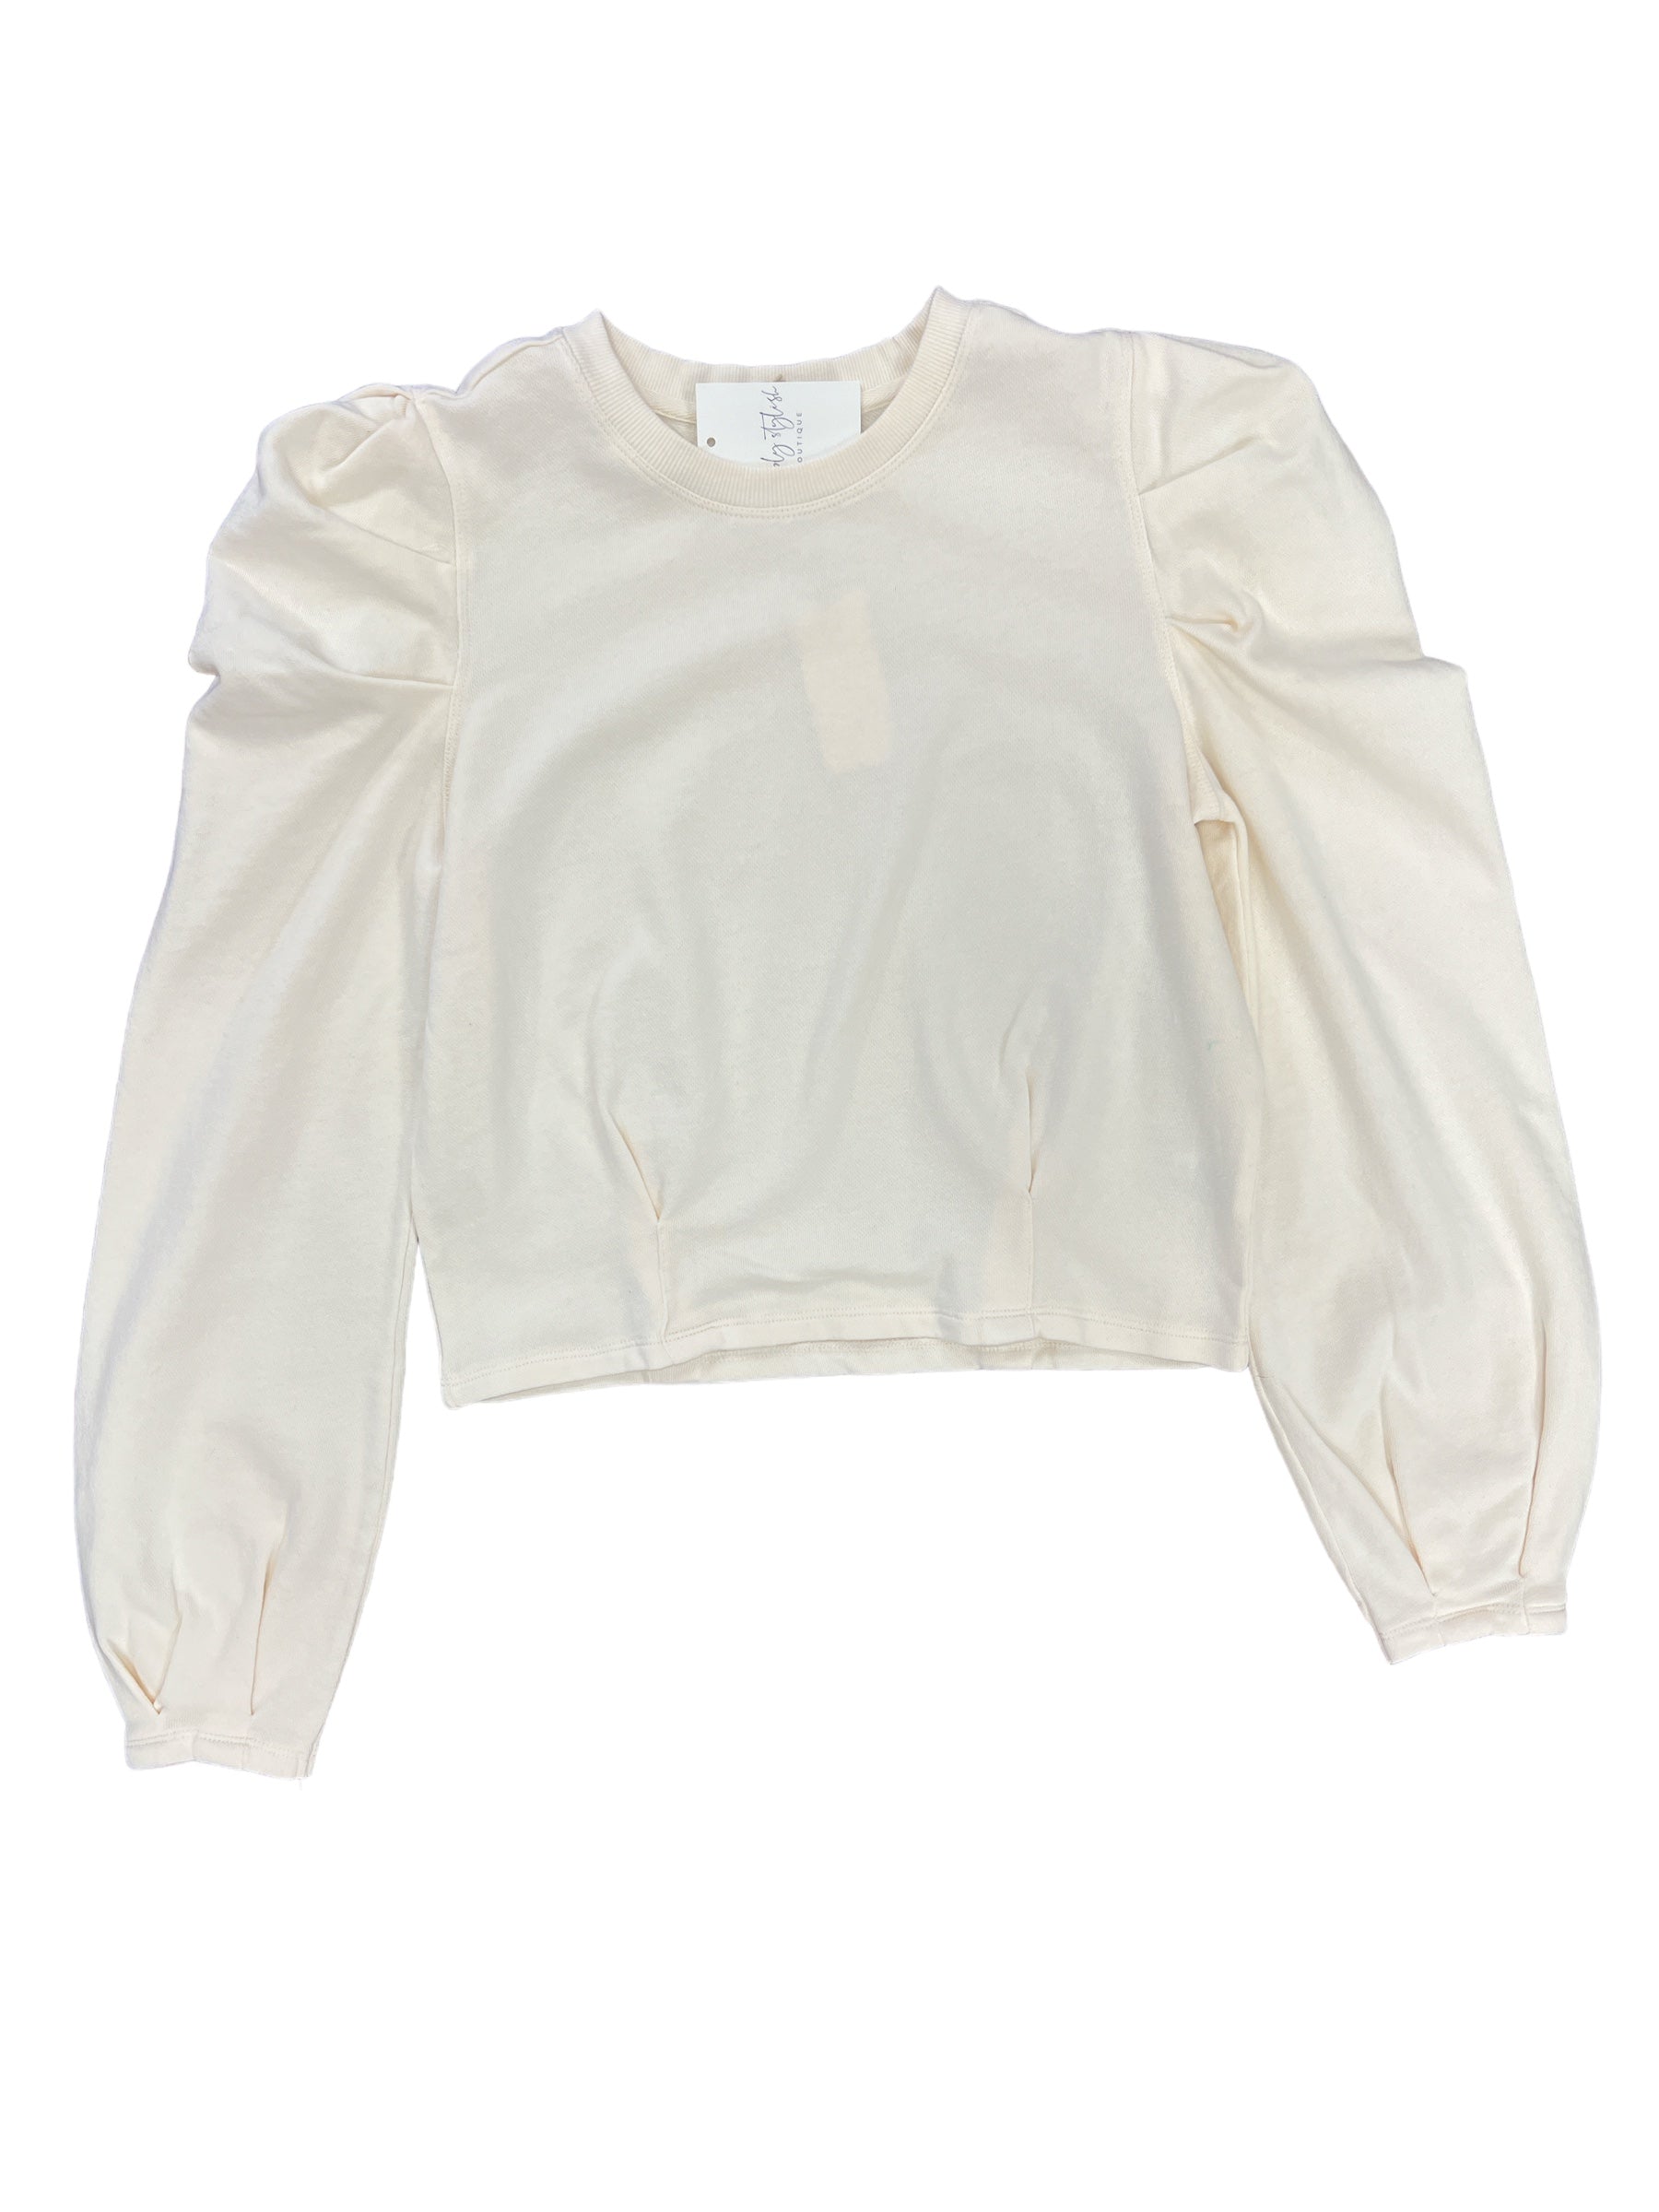 Ezmay Sweatshirt-140 Sweaters, Cardigans & Sweatshirts-Simply Stylish Boutique-Simply Stylish Boutique | Women’s & Kid’s Fashion | Paducah, KY